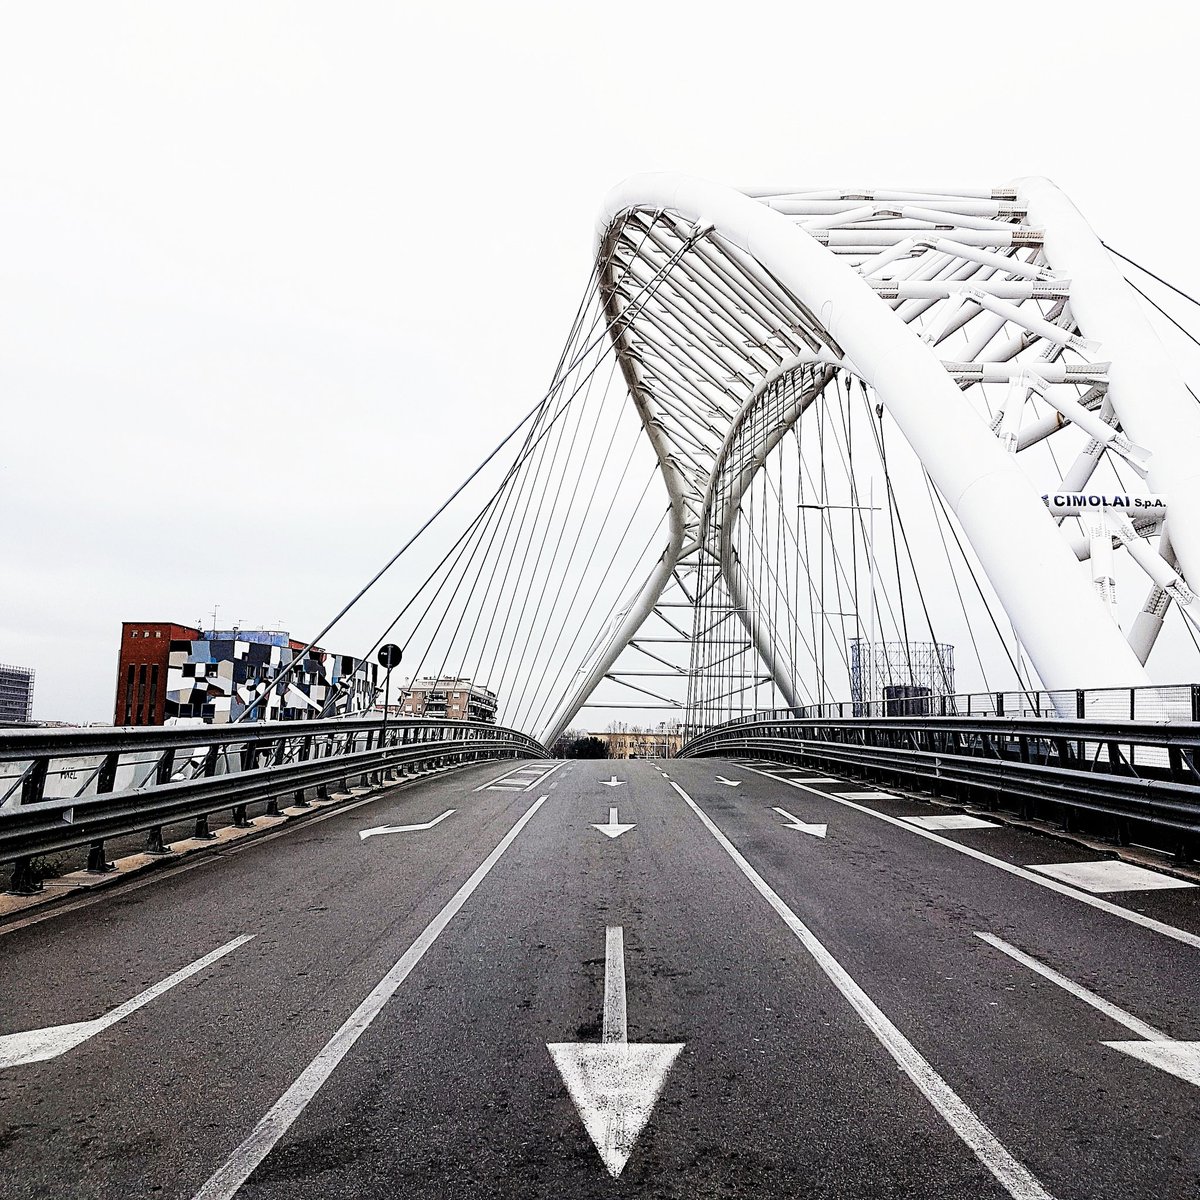 Directions
#Garbatella #Roma

#bridge #pontegarbatella
#rome #visitrome #discoverrome
#experiencerome #bellaroma
#italia #beautifuldestinations #wonderful_places #living_europe
#bellaitalia 

#giggiseyes #instagram
instagram.com/p/Bf0a2rLHgkQ/